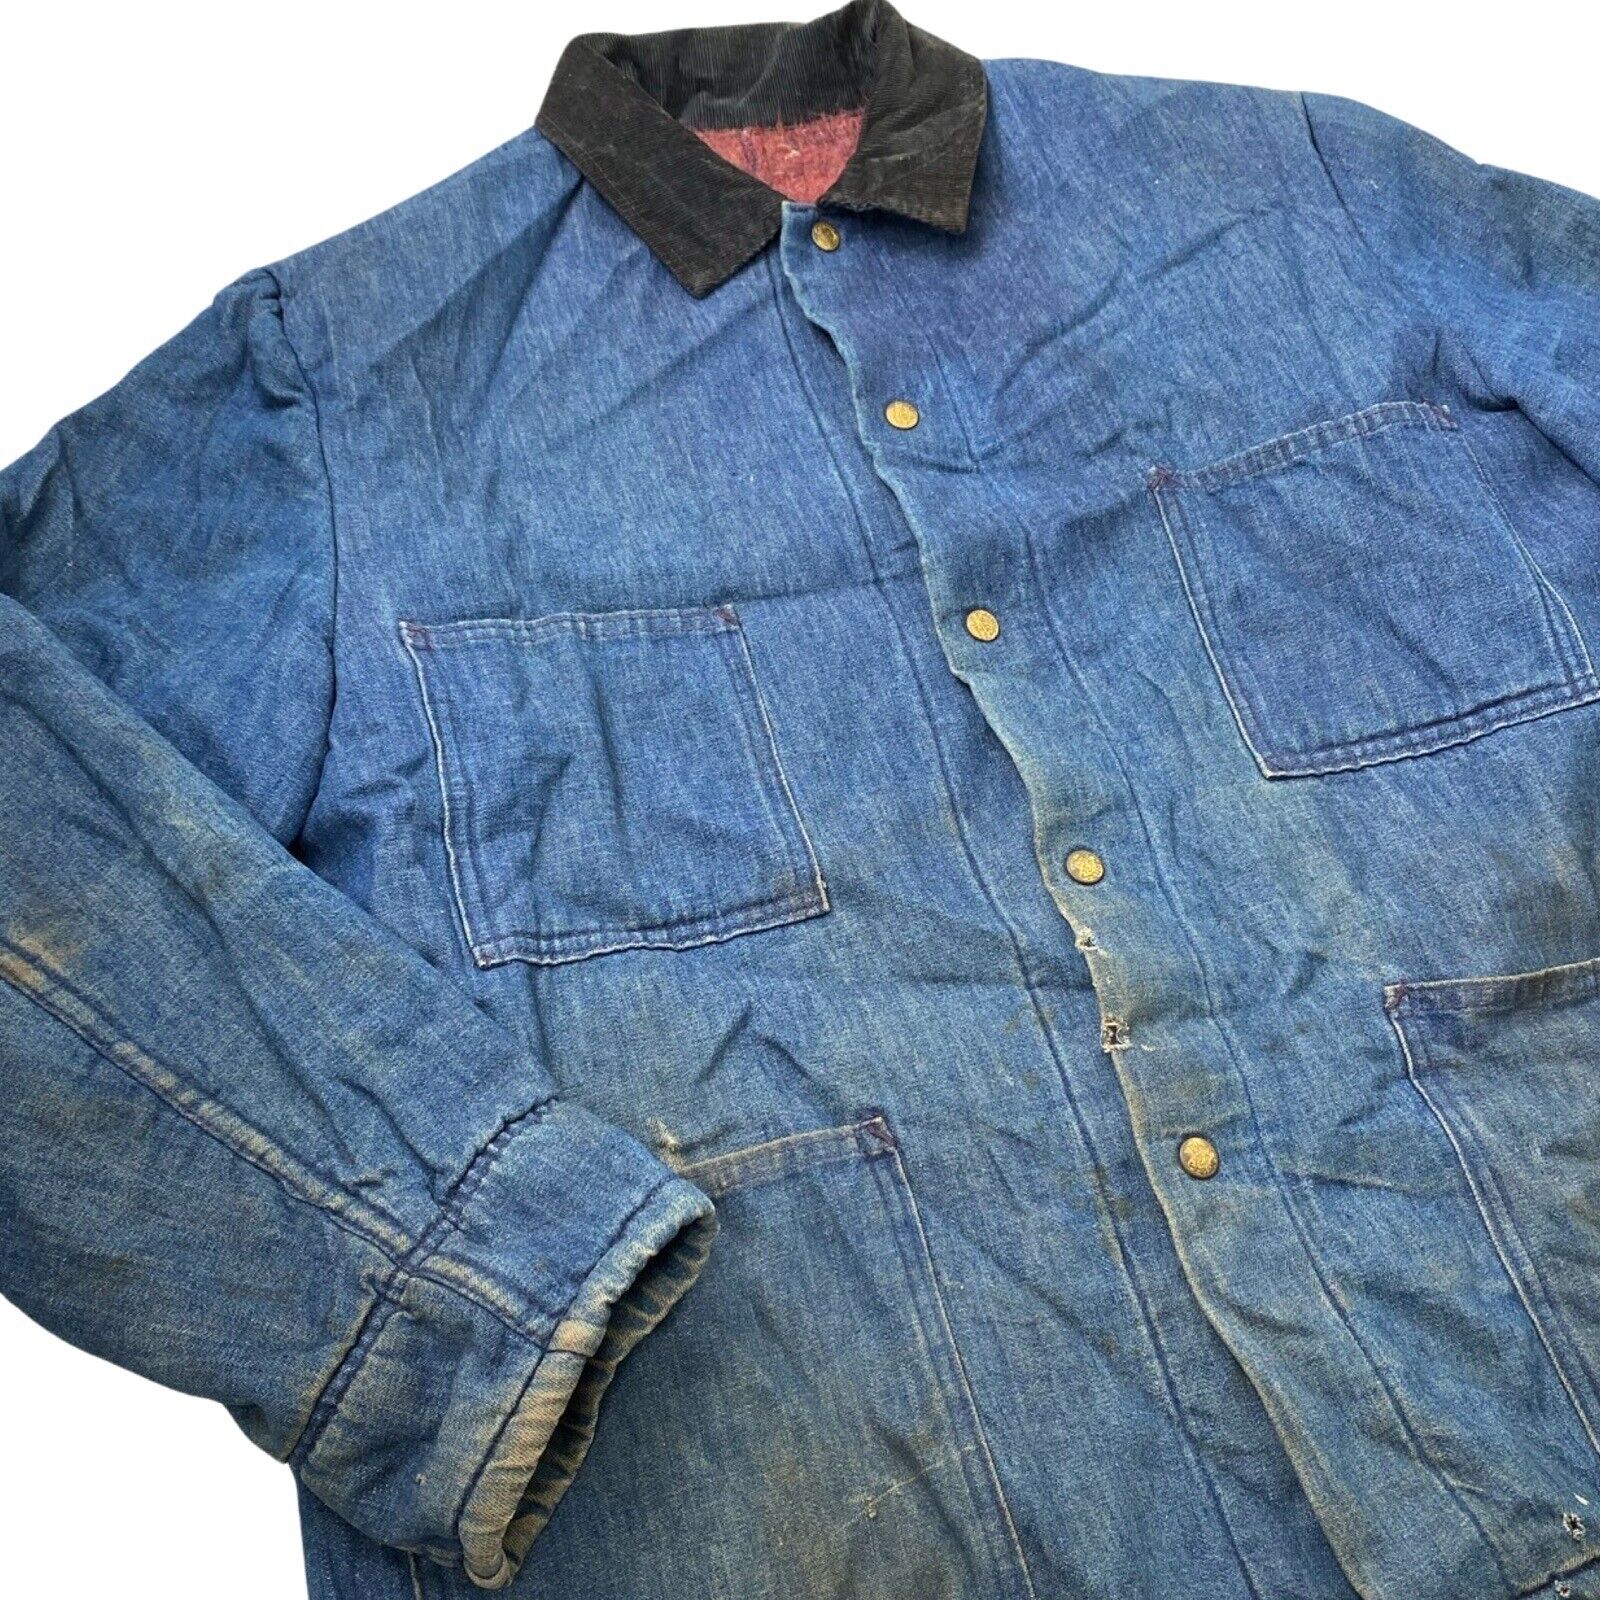 Vintage 60’s Carters Lined Jean Jacket Barn Chore Denim Coat Distressed XL